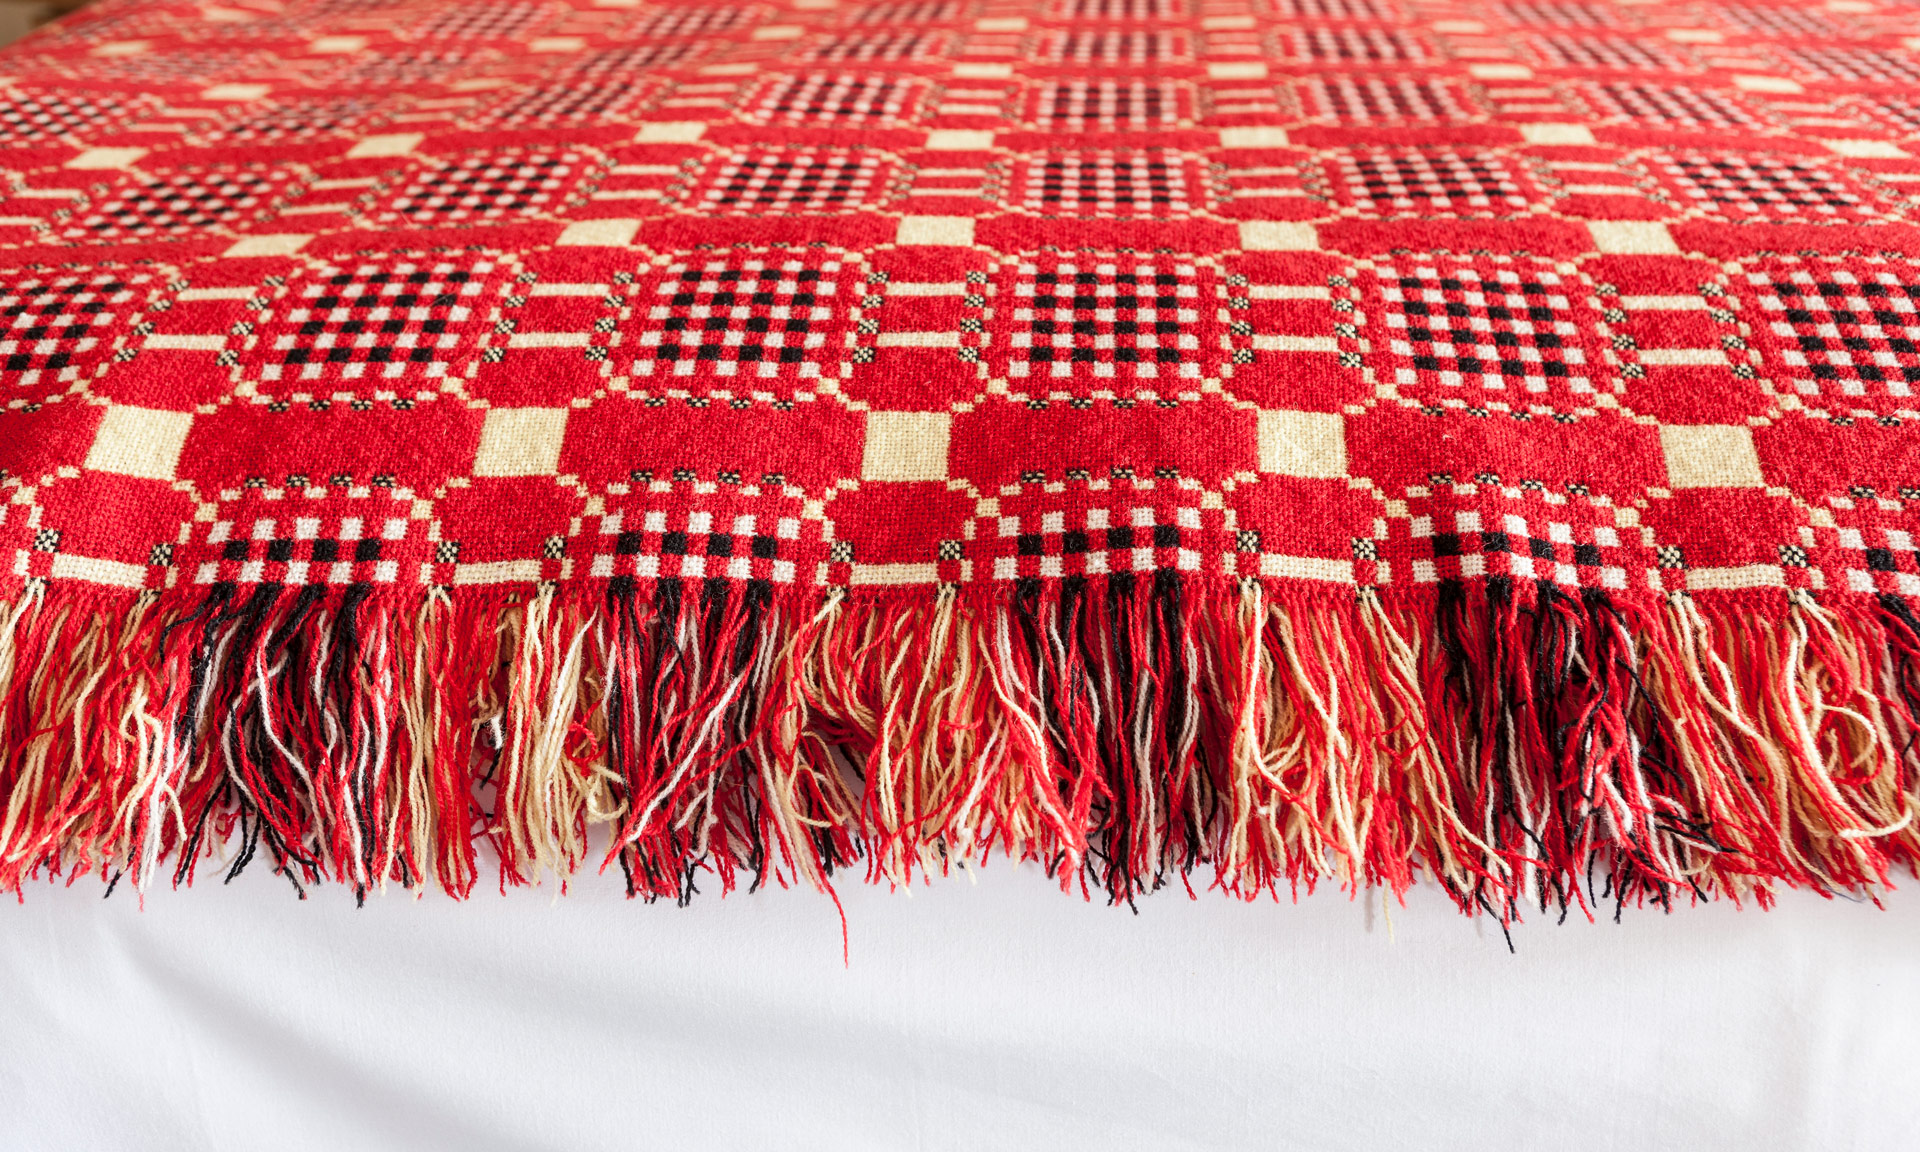 Traditional Welsh blanket